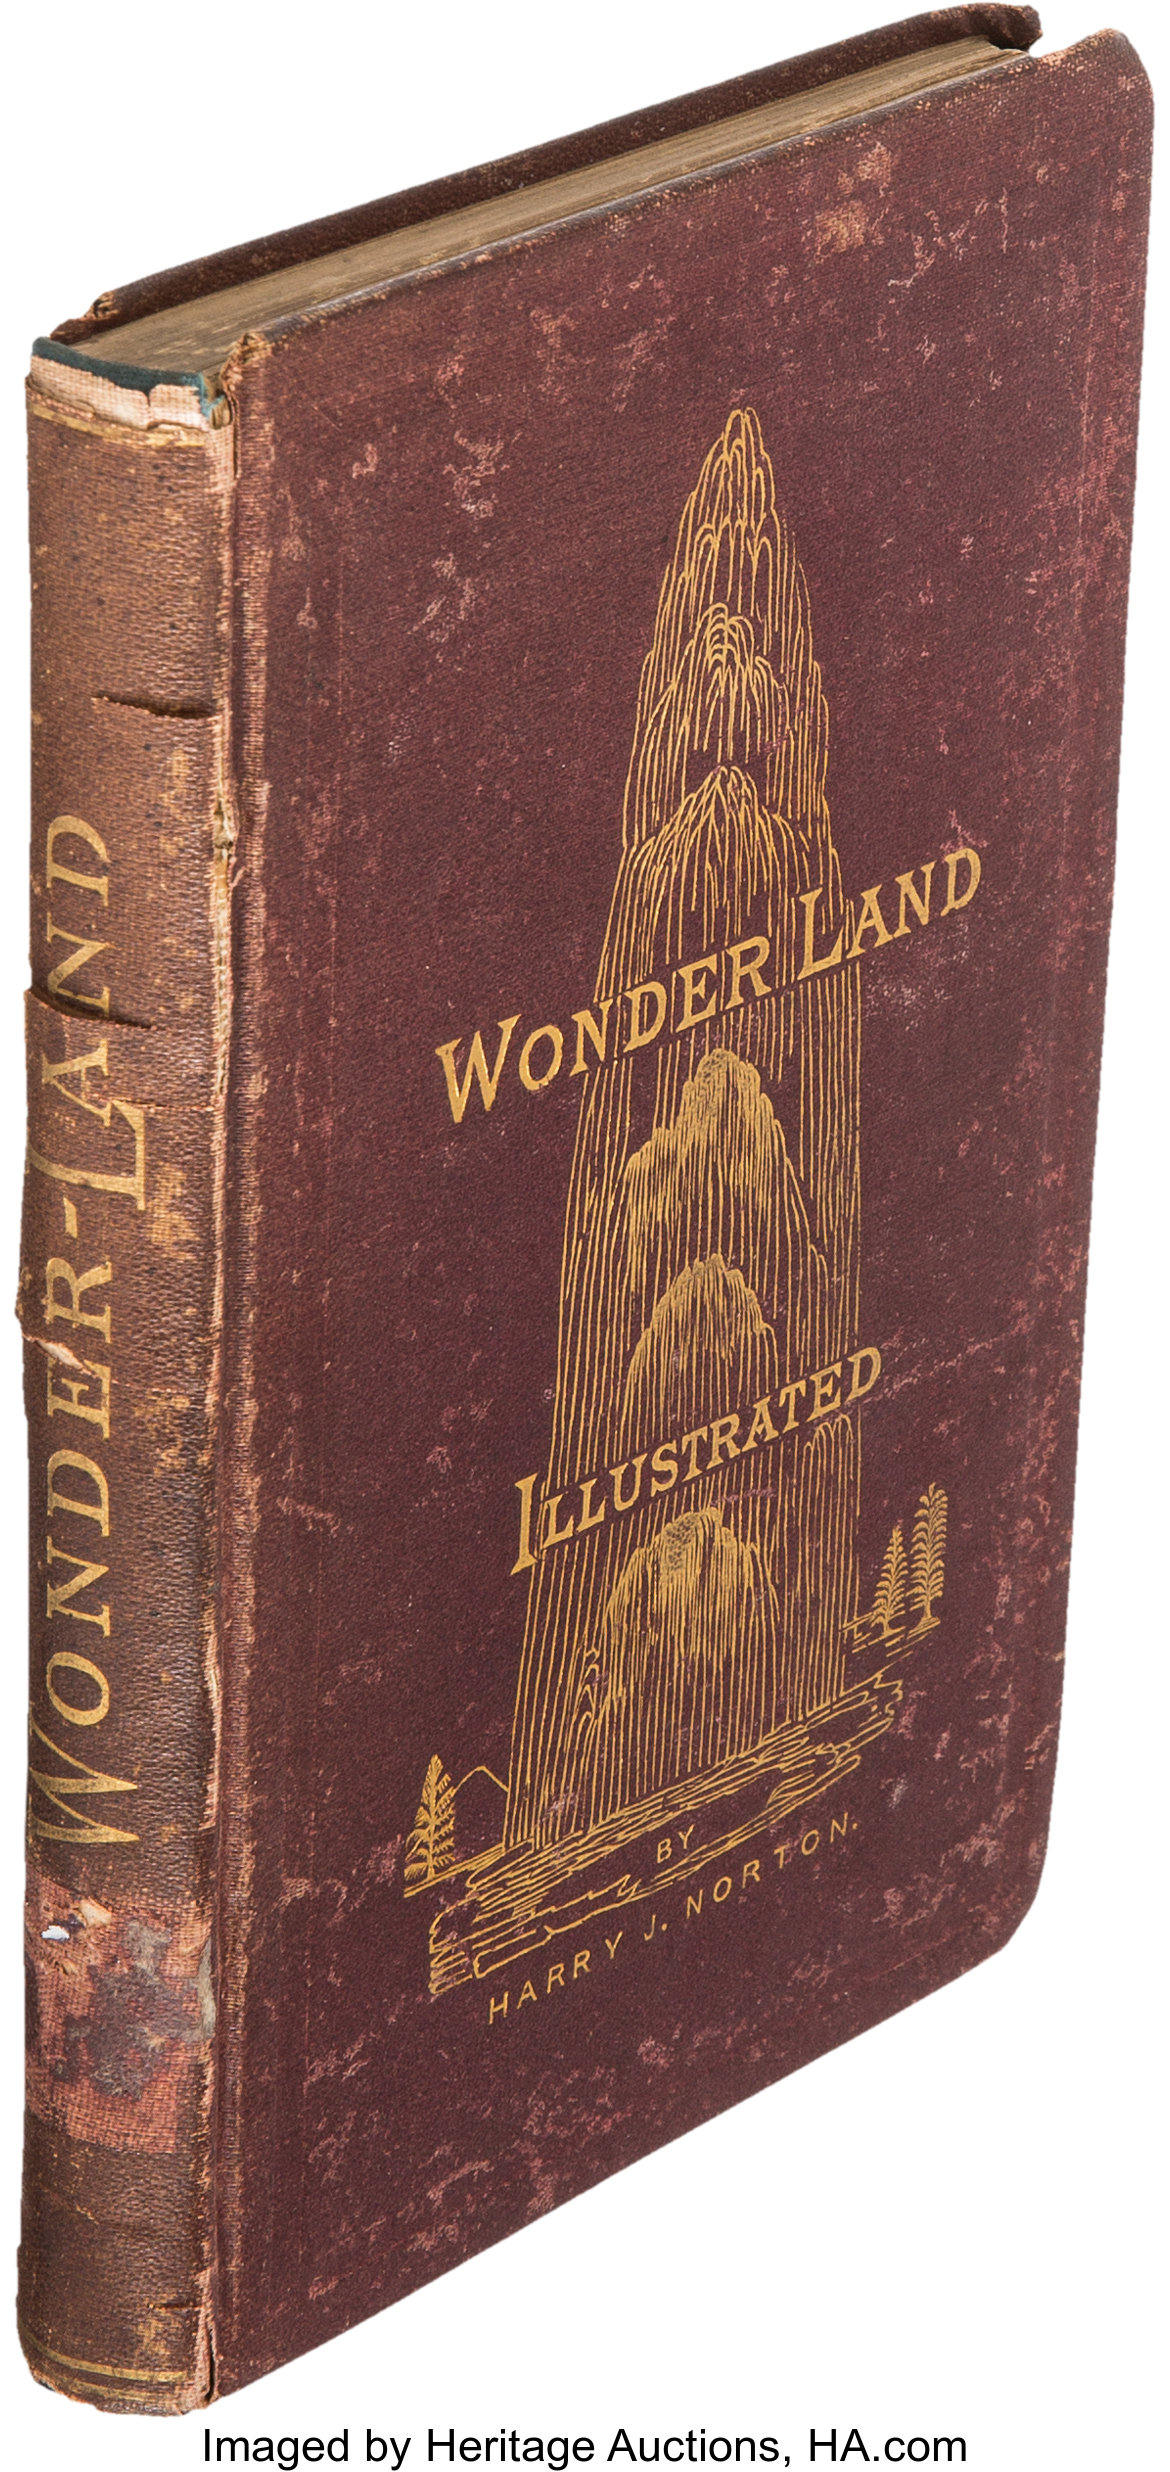 Harry J. Norton. Wonder-Land Illustrated; or, Horseback Rides